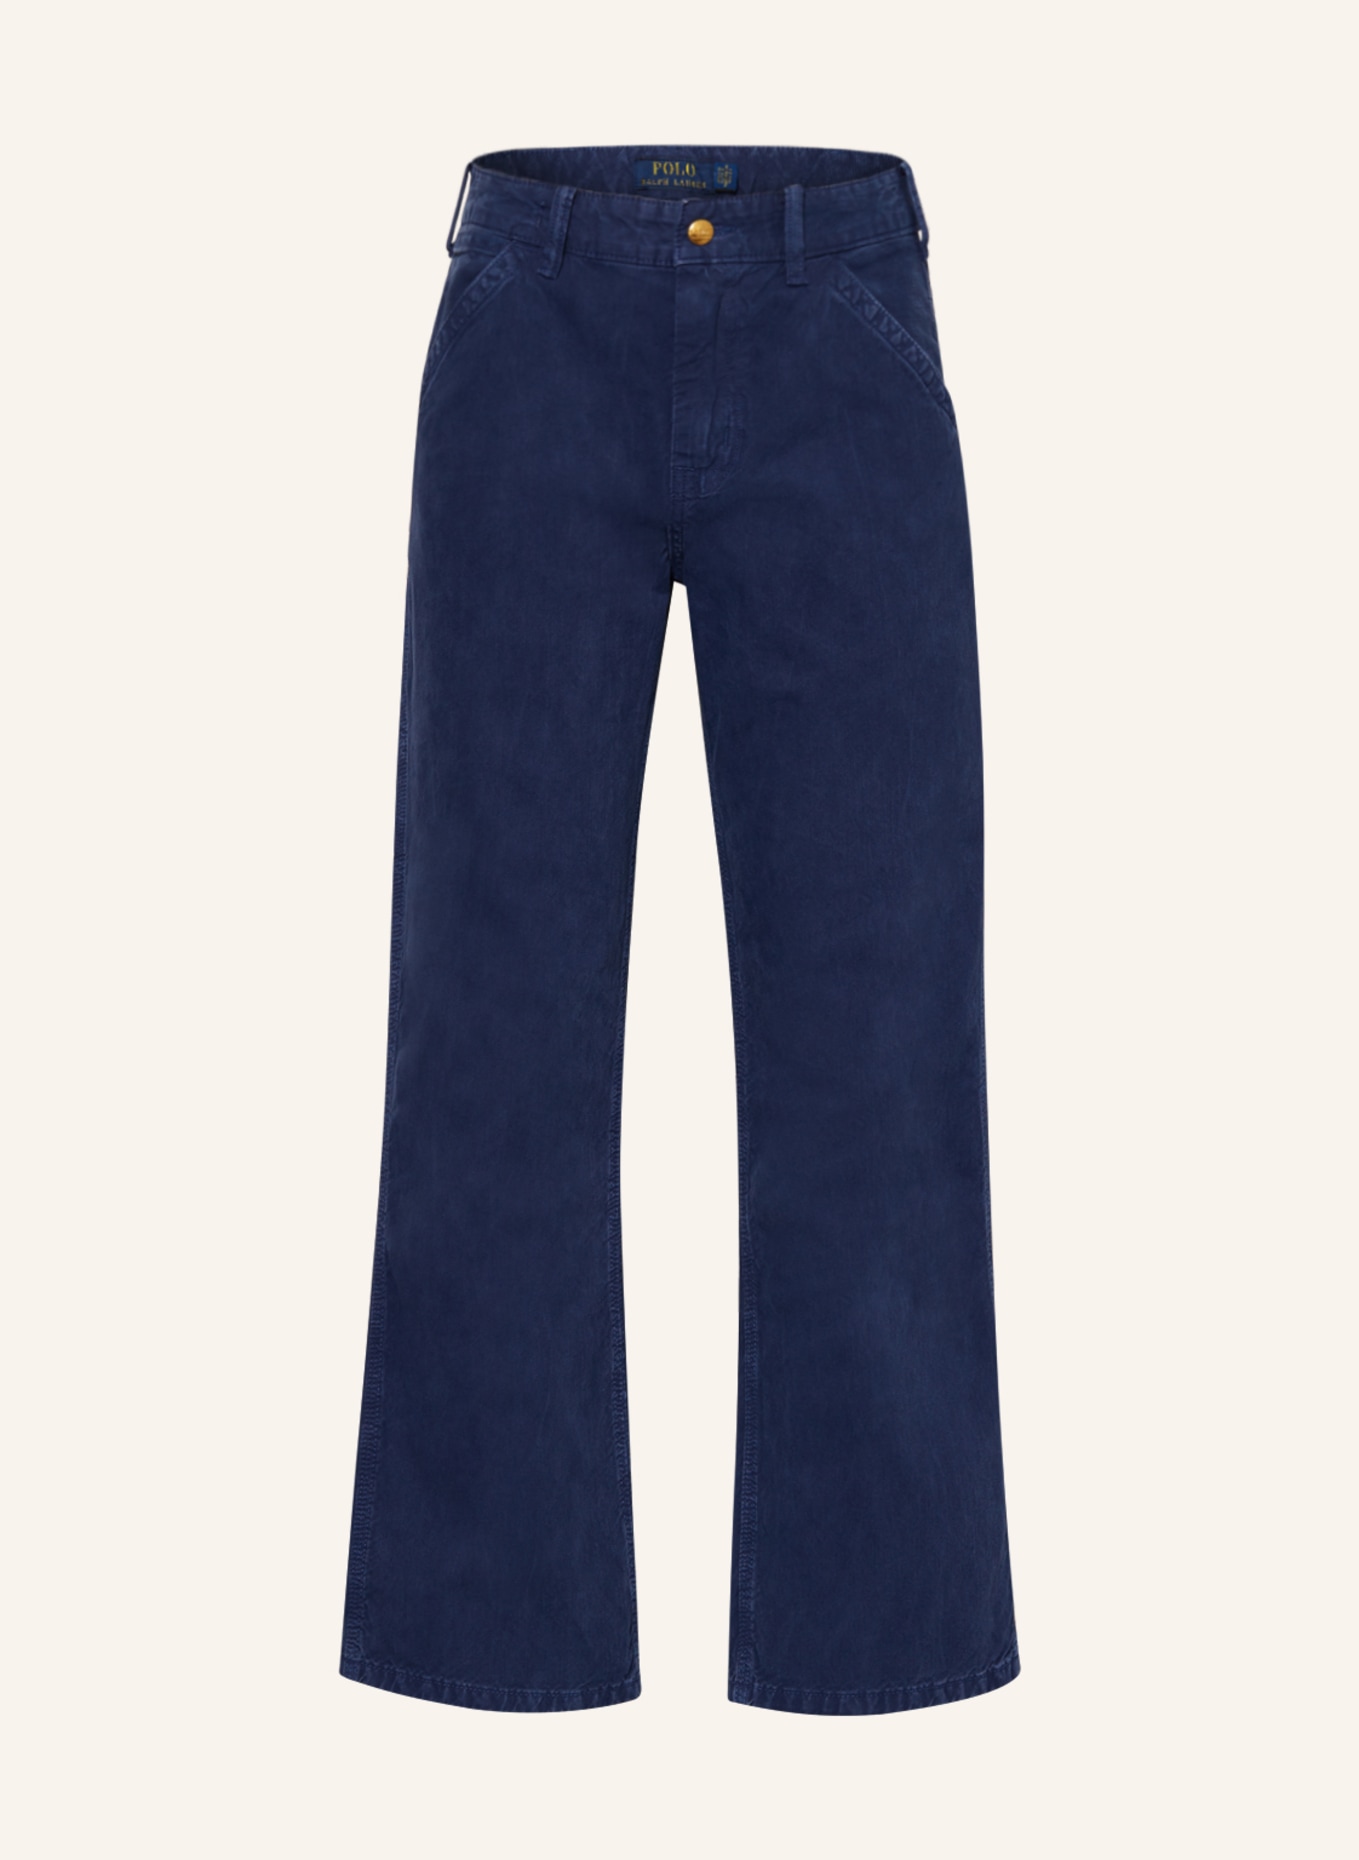 POLO RALPH LAUREN Jeans, Farbe: DUNKELBLAU (Bild 1)